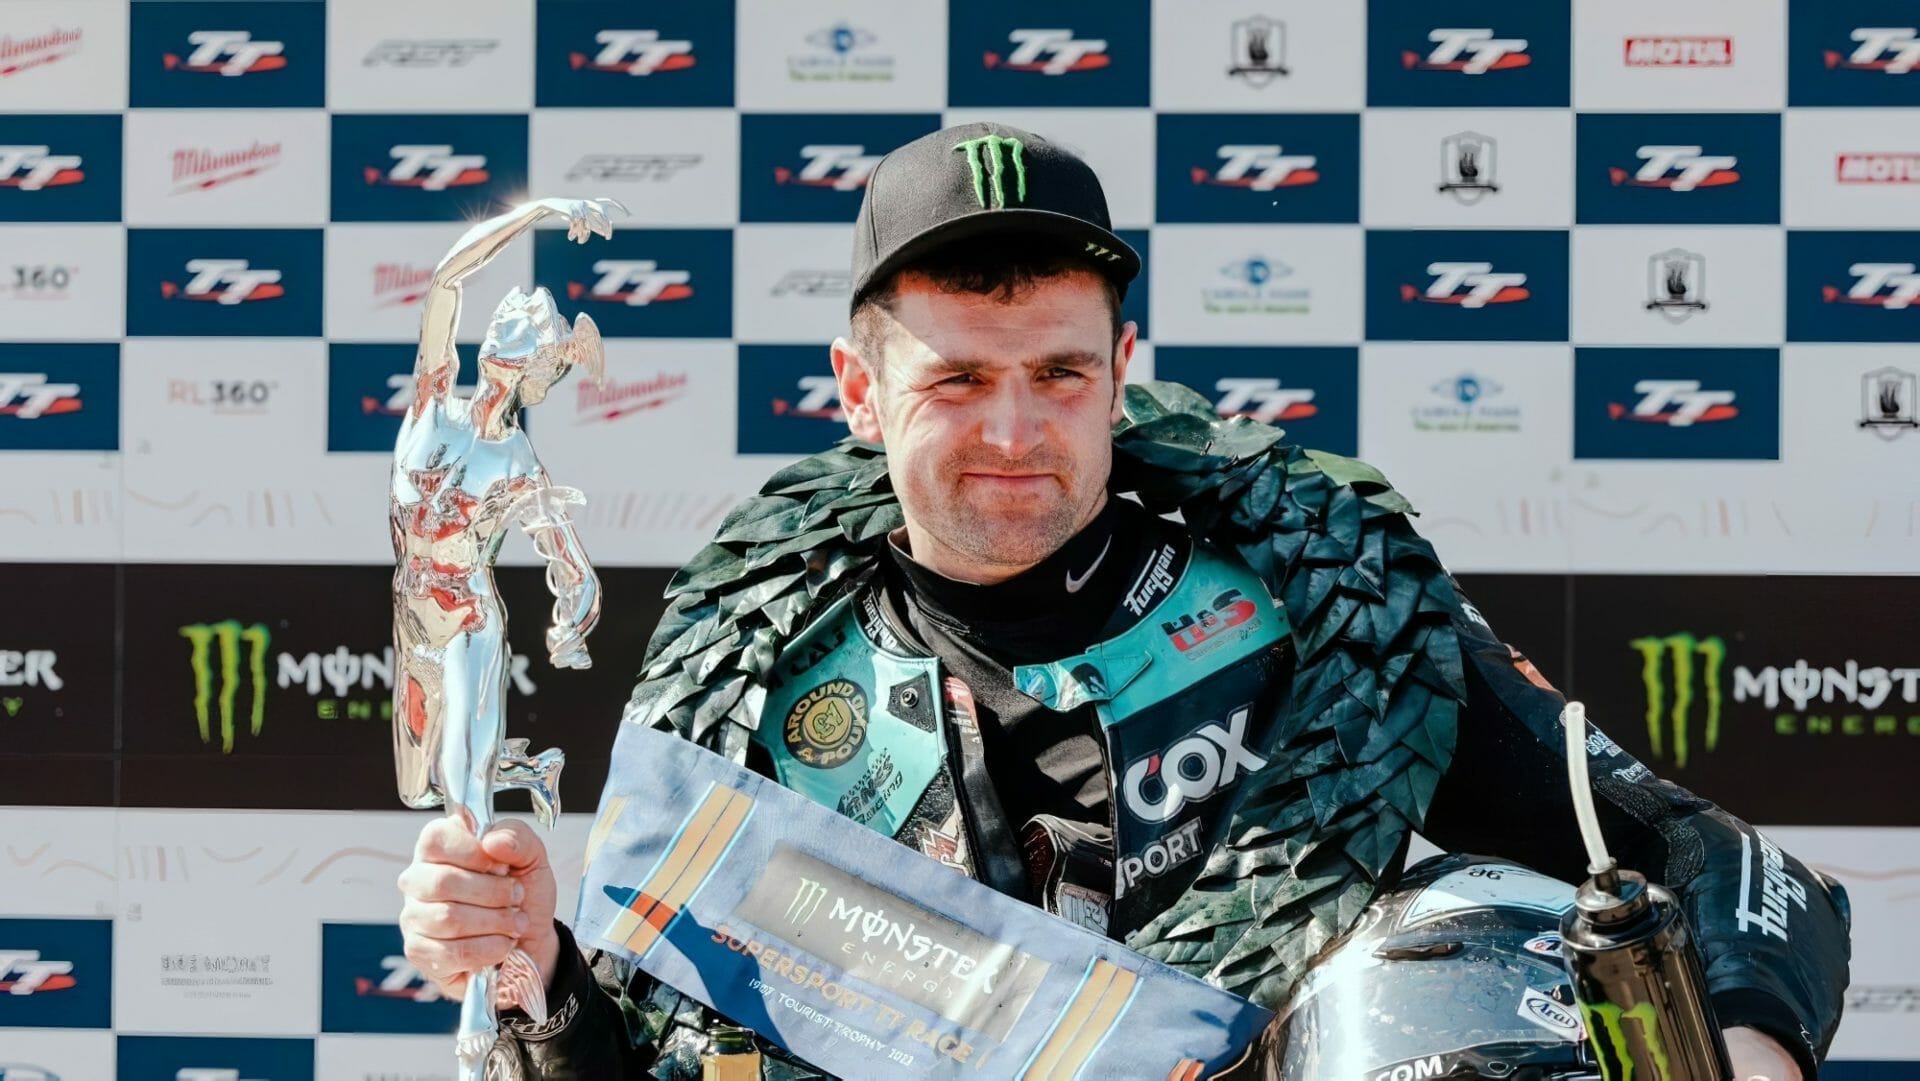 Michael Dunlop triumphs in opening race of Monster Energy Supersport TT